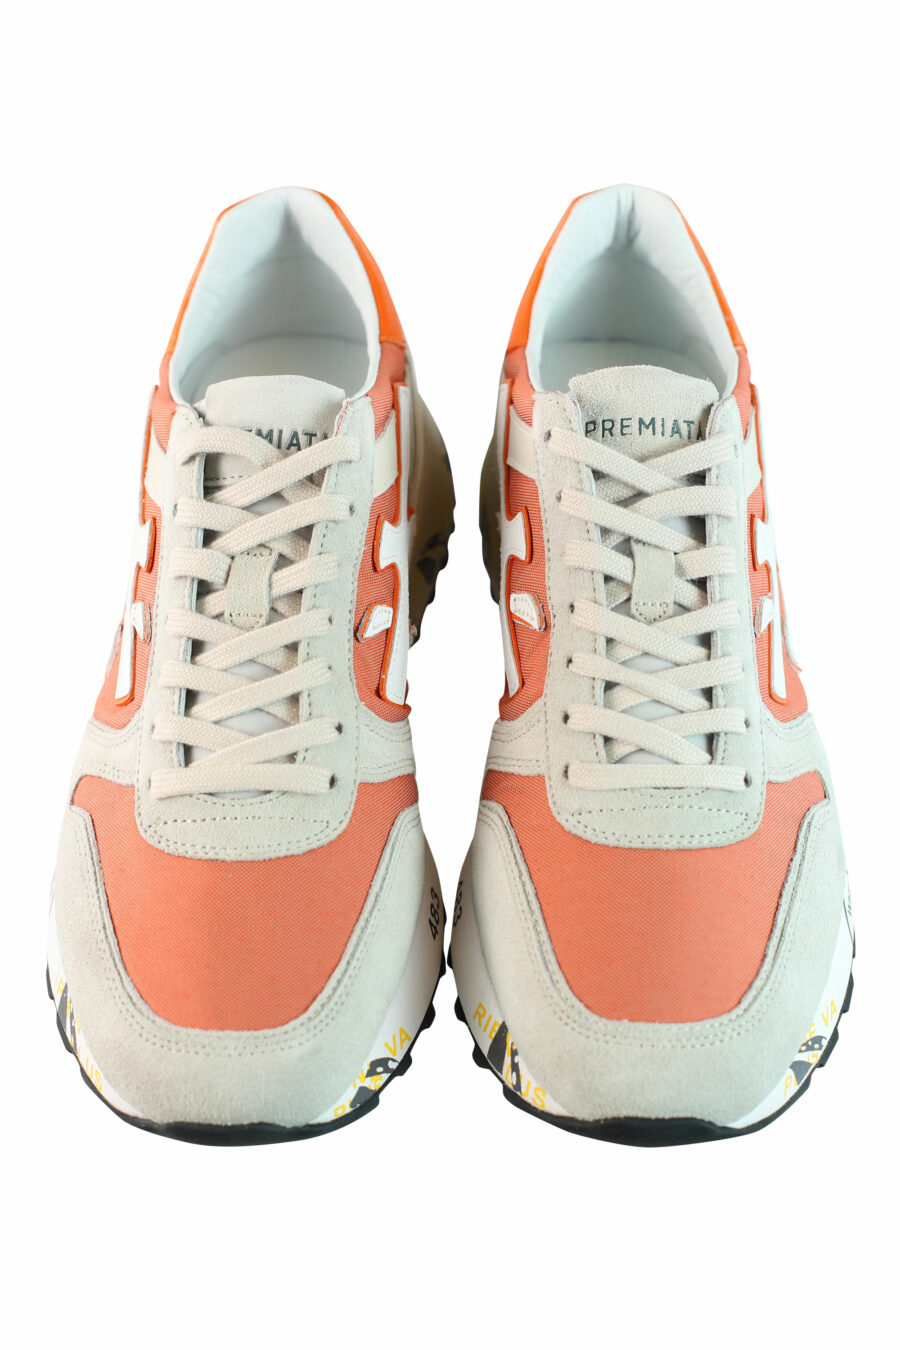 Zapatillas naranja con gris "mick 6170" - IMG 0857